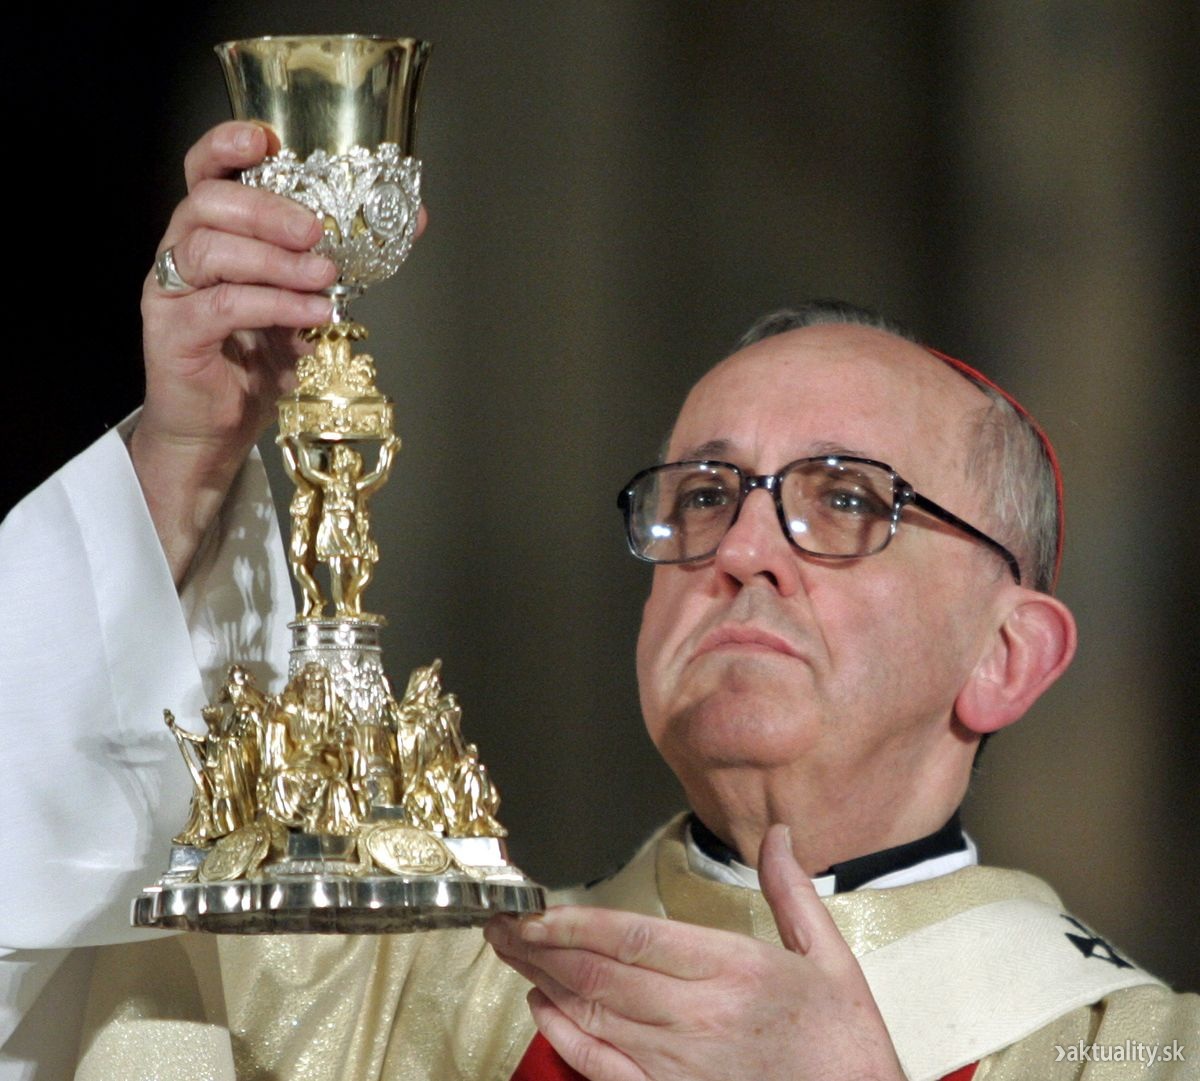 Papež František vyzval církev ke společné hodinové adoraci v neděli 2. června